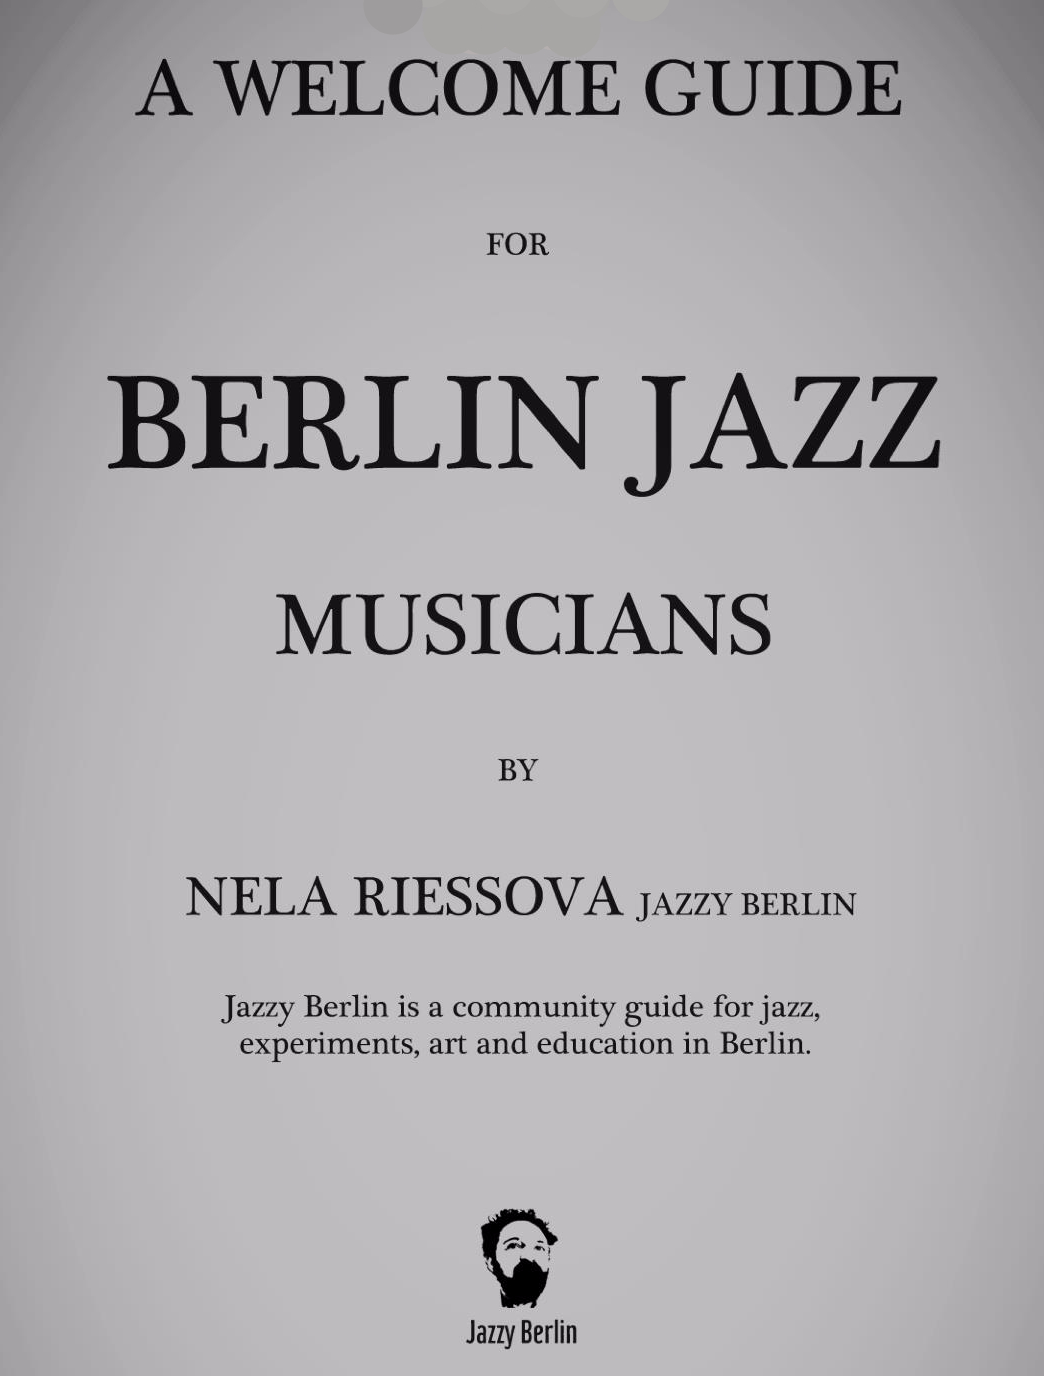 berlin jazz guide for musicians